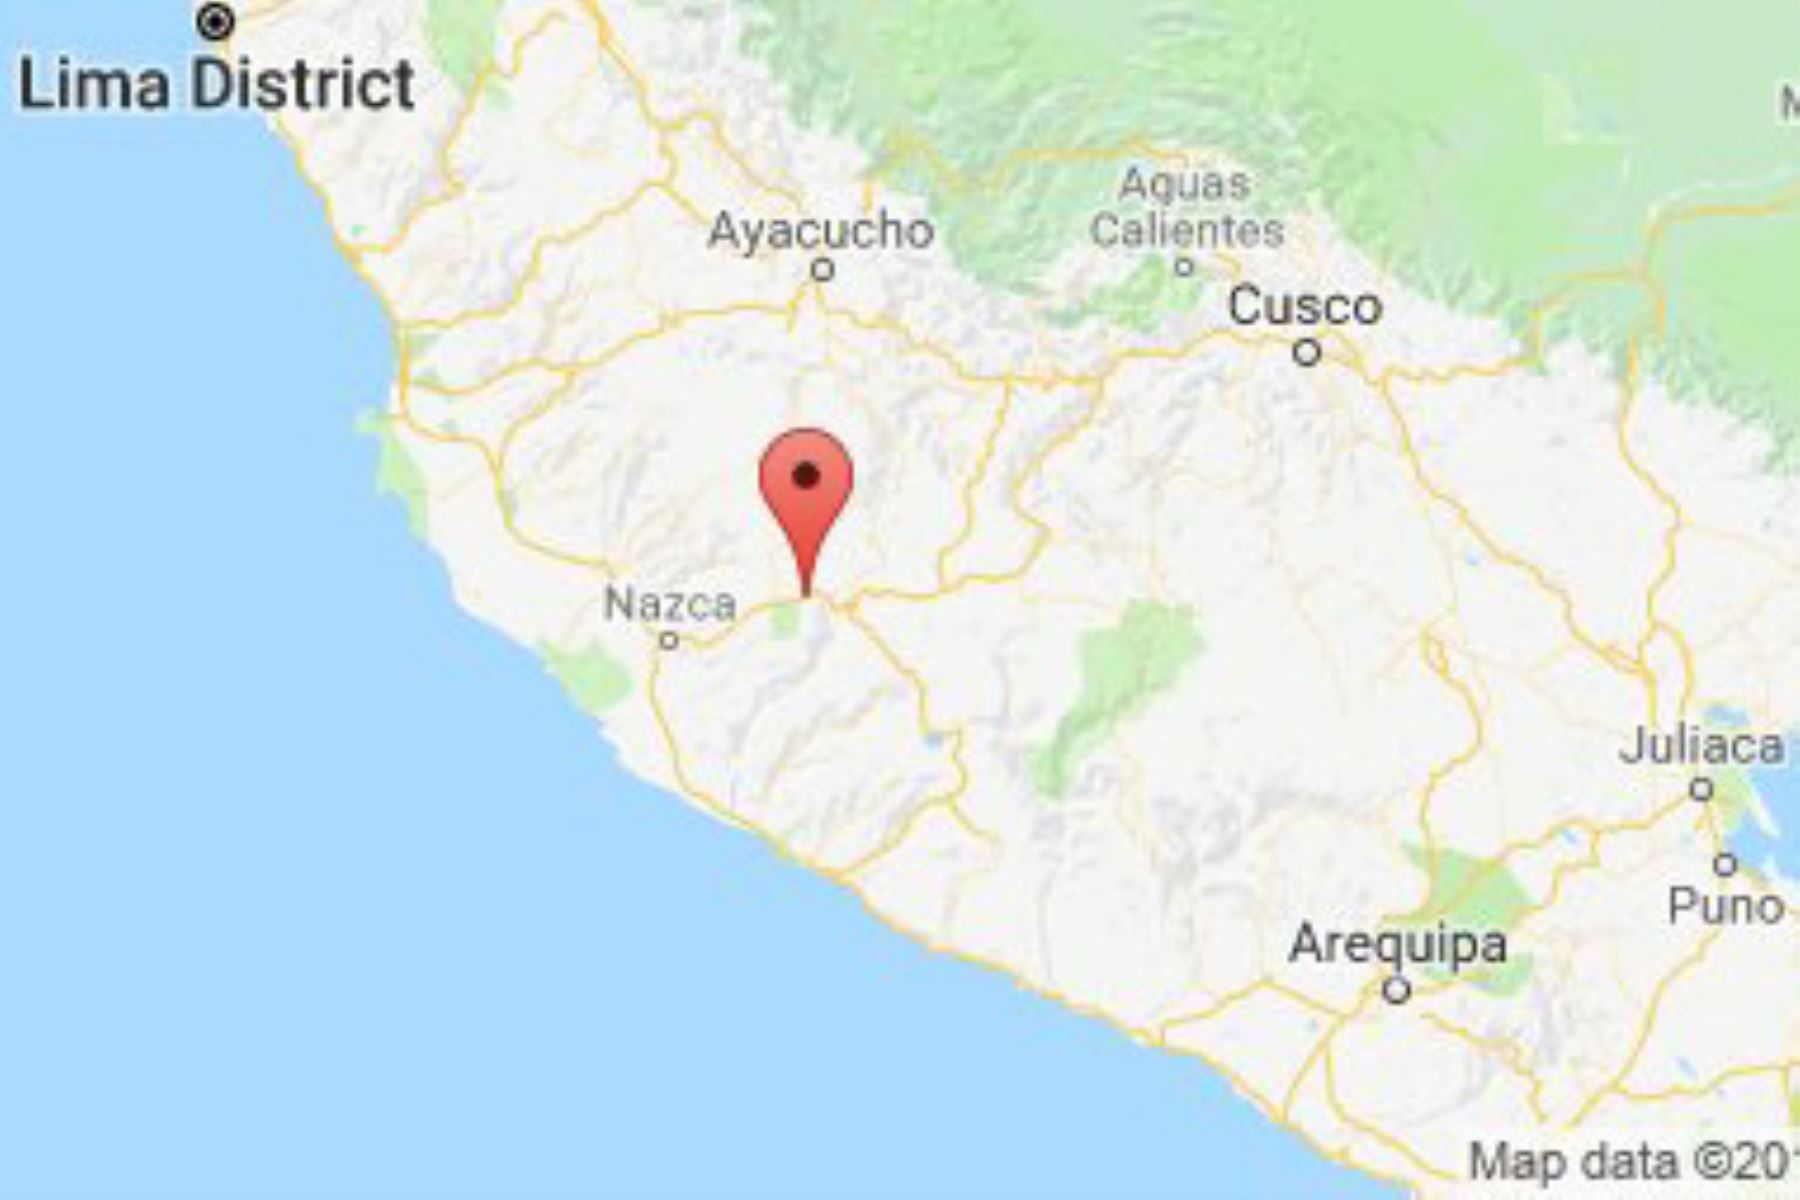 Sismo de magnitud 4.1 sacudió Ayacucho esta madrugada. ANDINA/Difusión